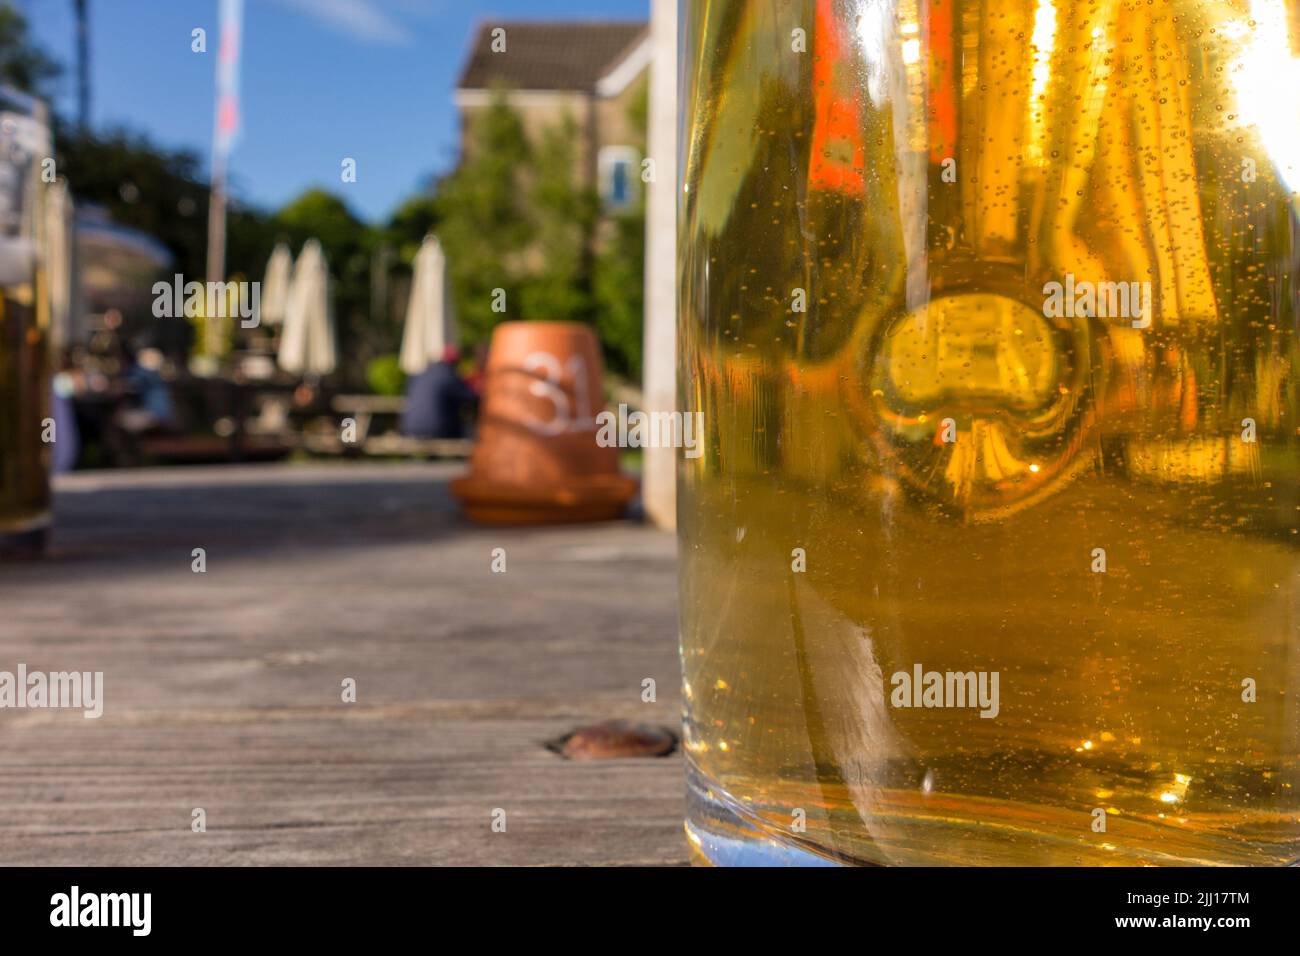 Pint of beer and pub garden, Tetbury, Gloucestershire, UK Stock Photo